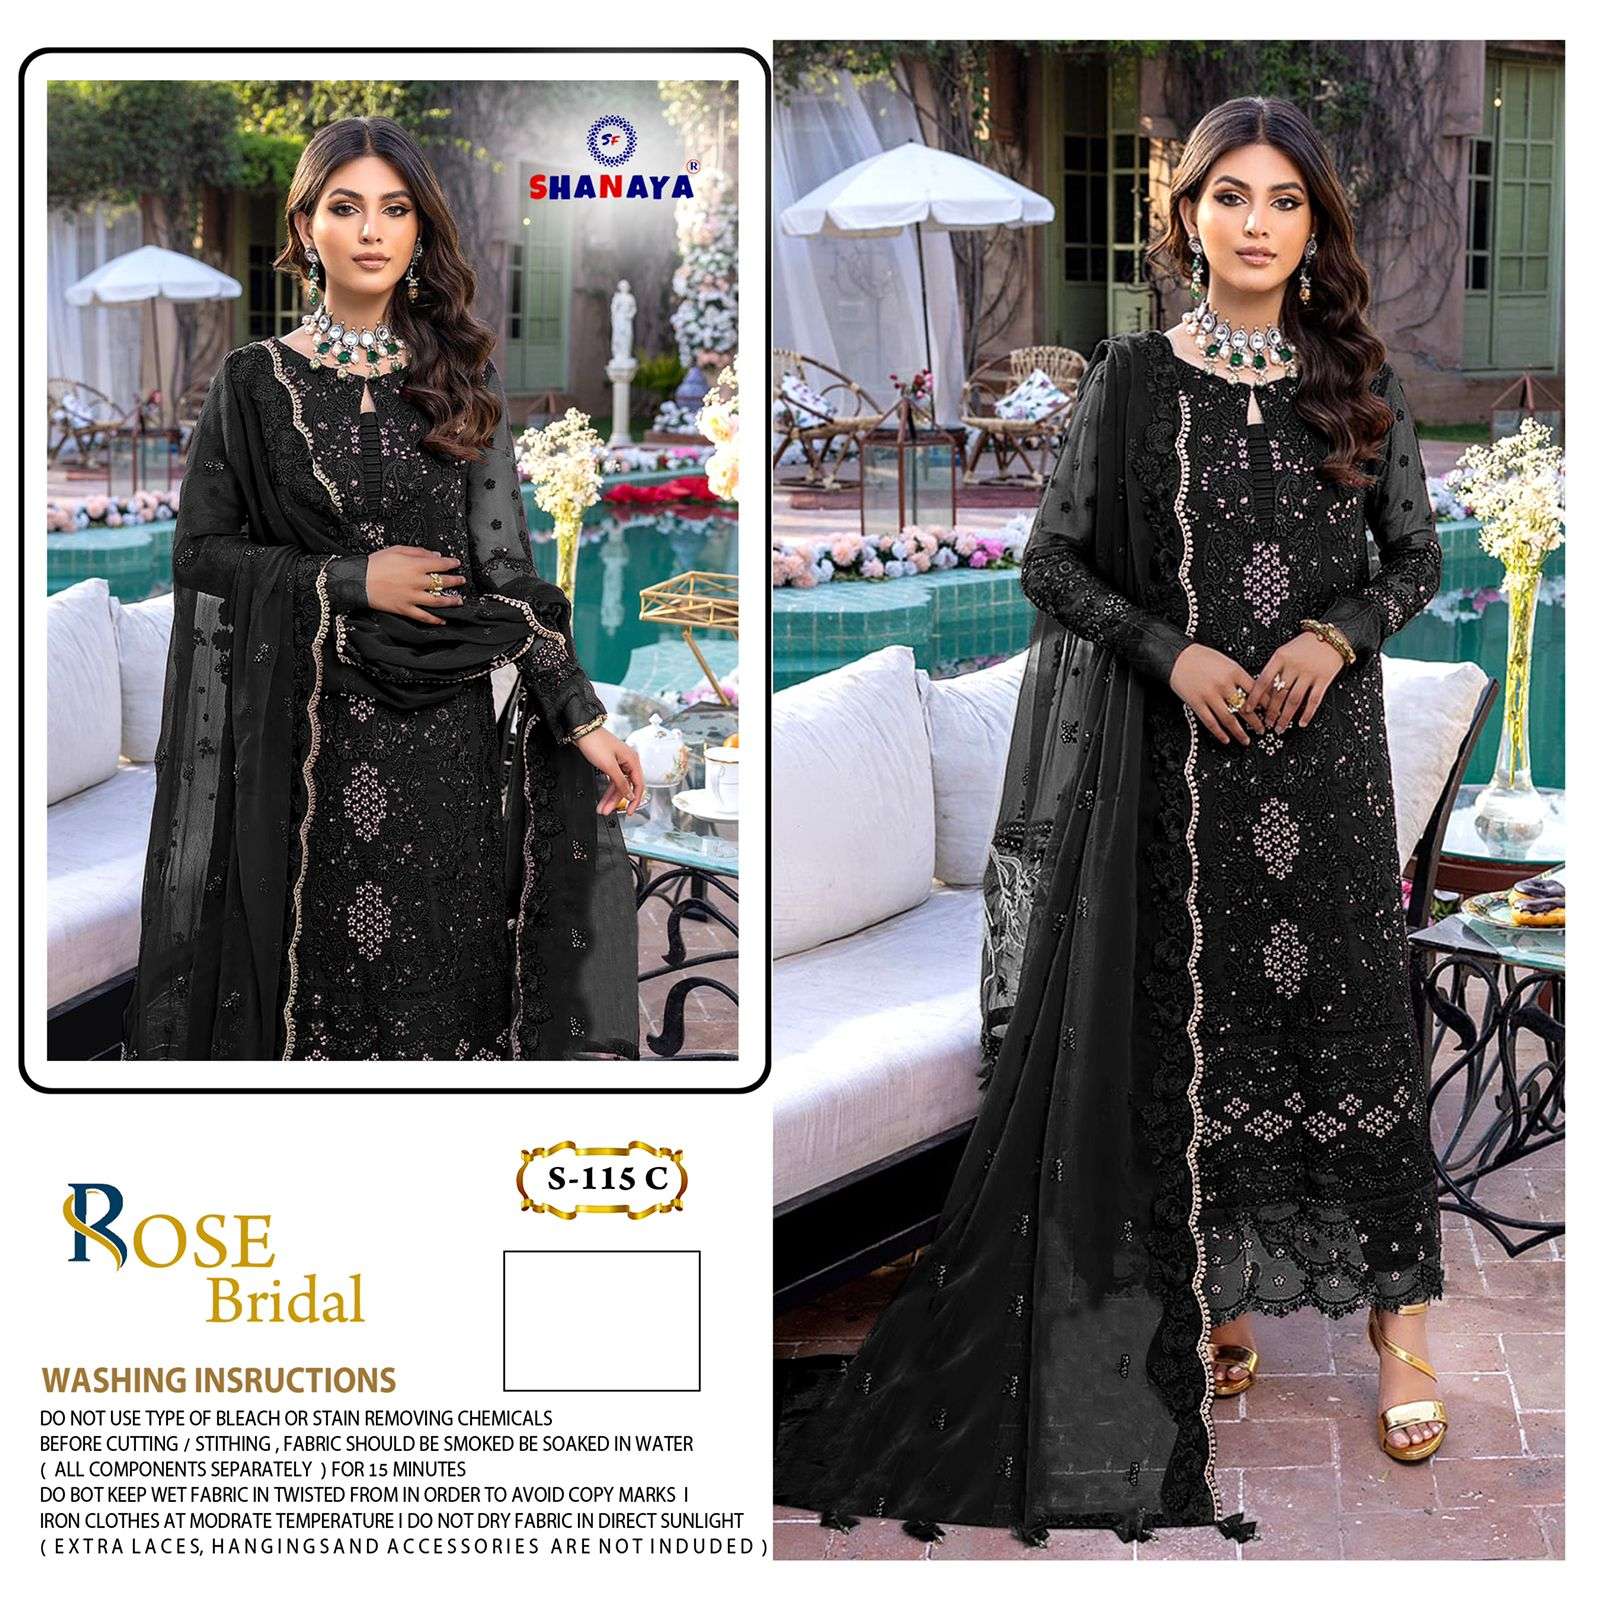 shanaya rose bridal s-115 colour edition pakistani salwar kameez online wholesaler surat 